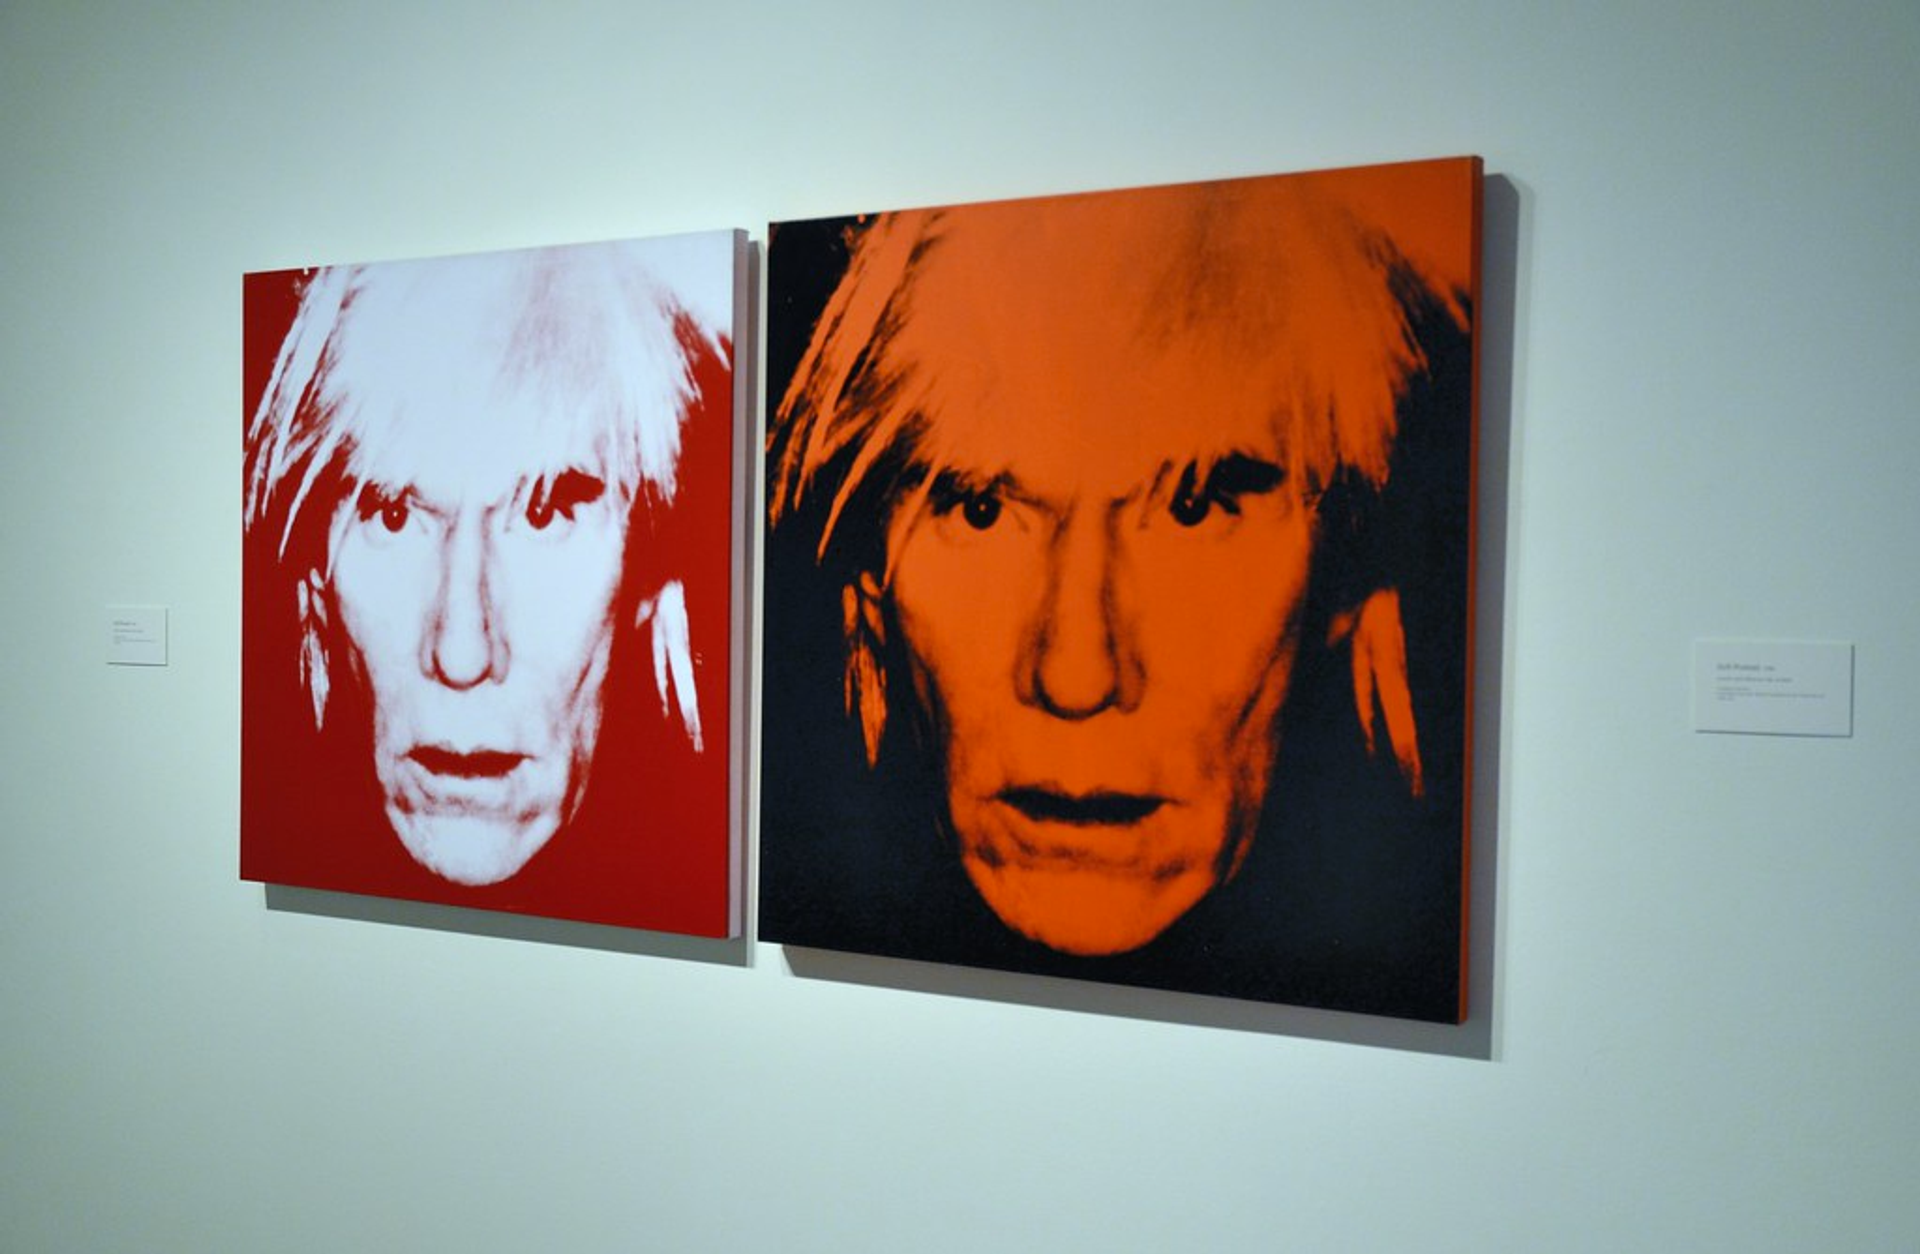 Andy Warhol: The Original Influencer Artist